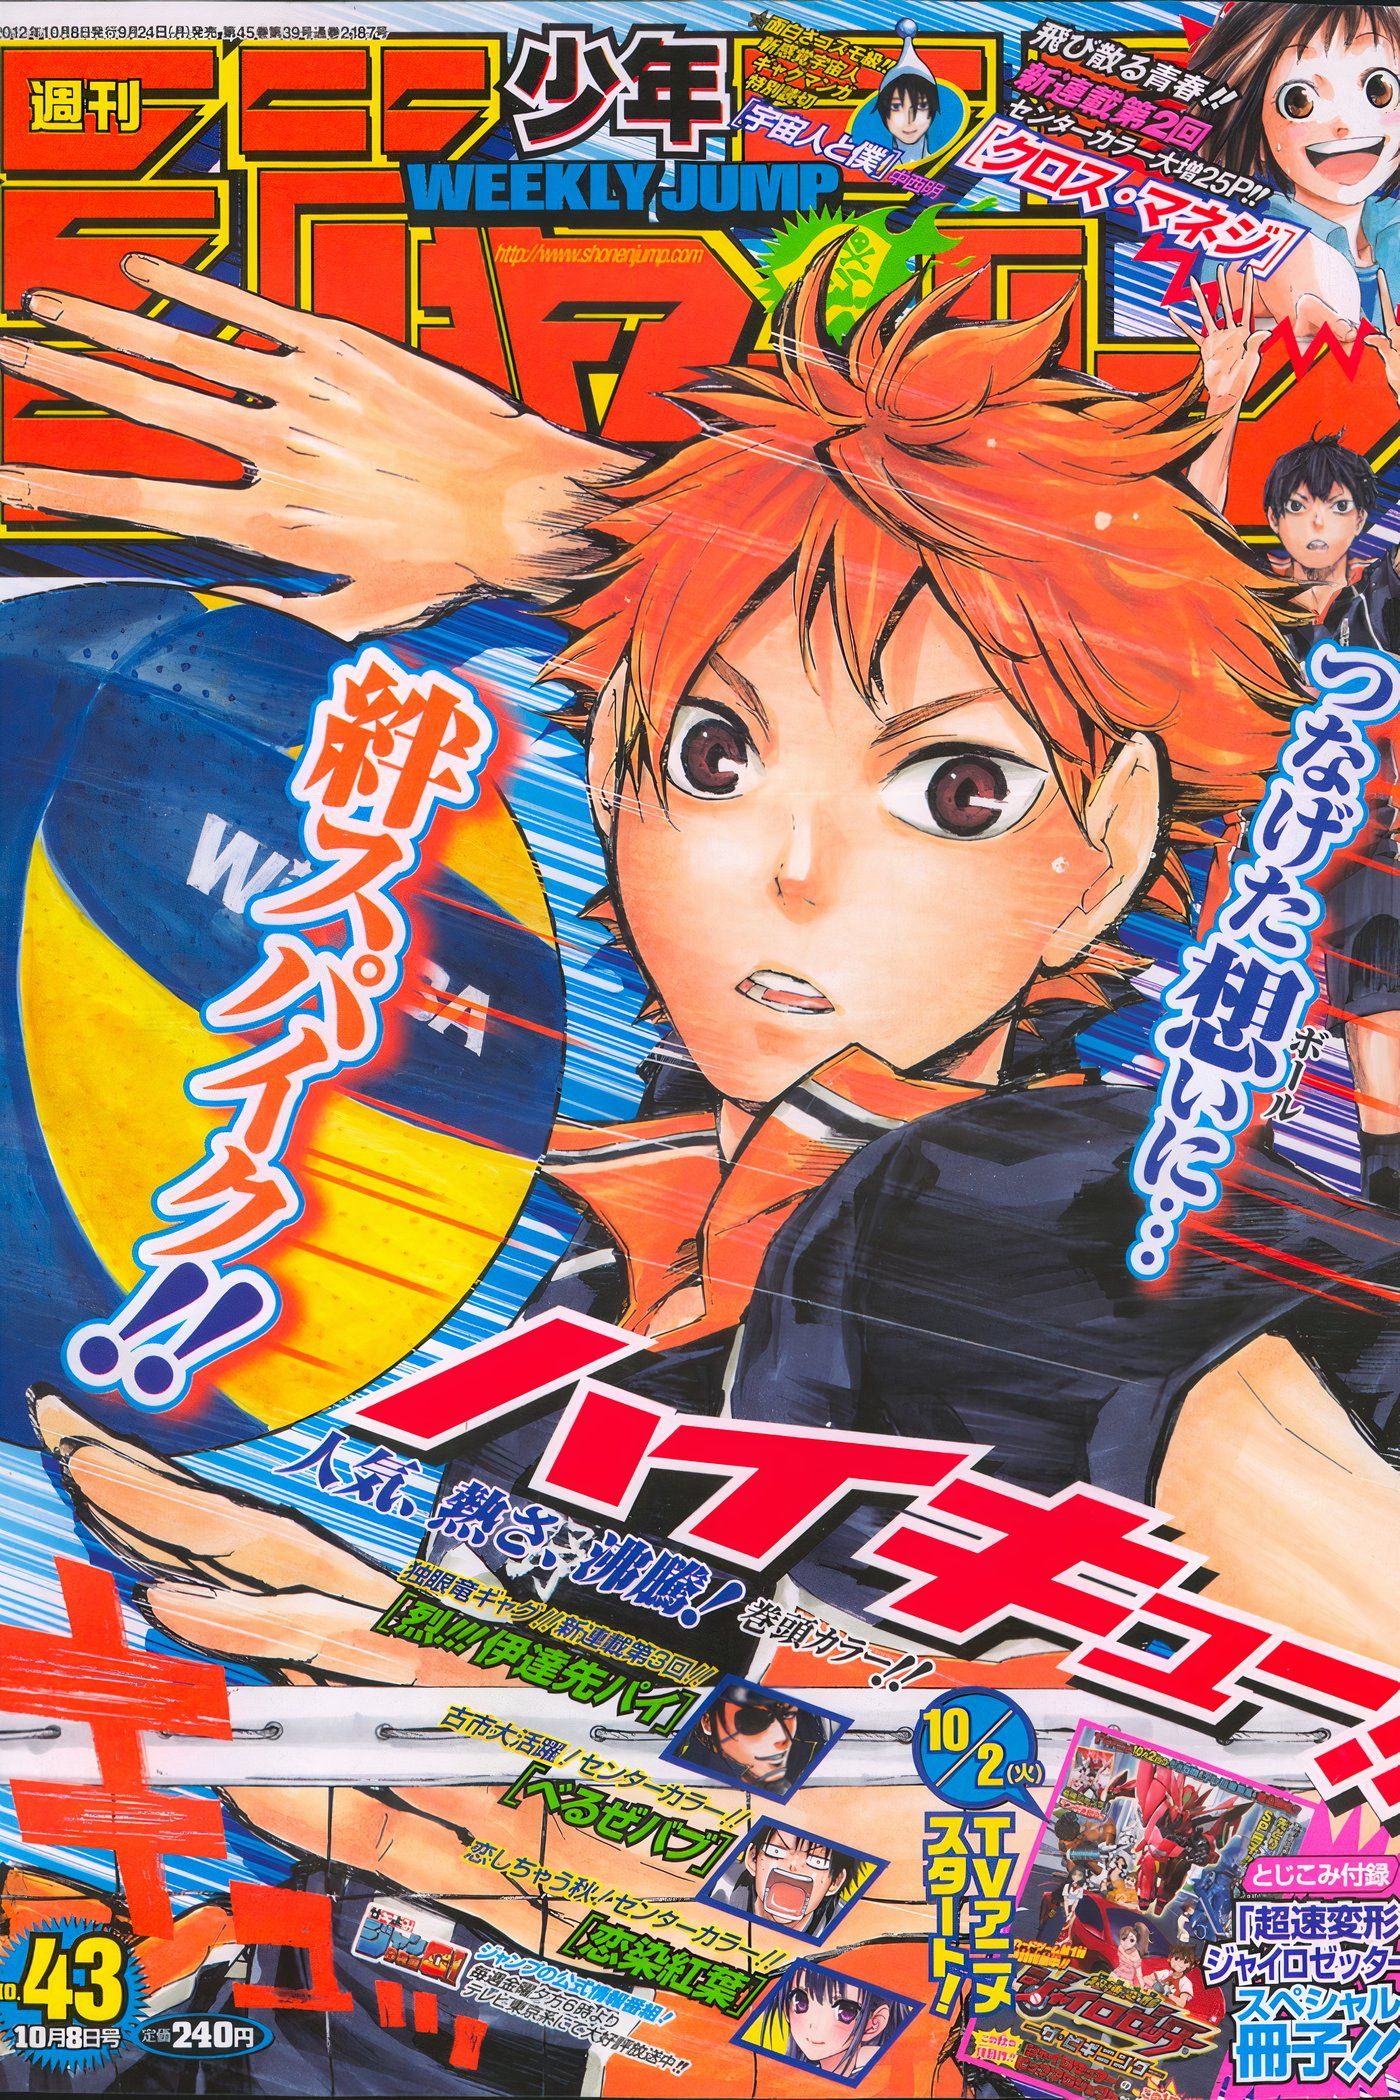 Haikyuu Weekly Shonen Jump Cover #2187 Hinata prestes a bater uma bola com Kageyama atrás dele